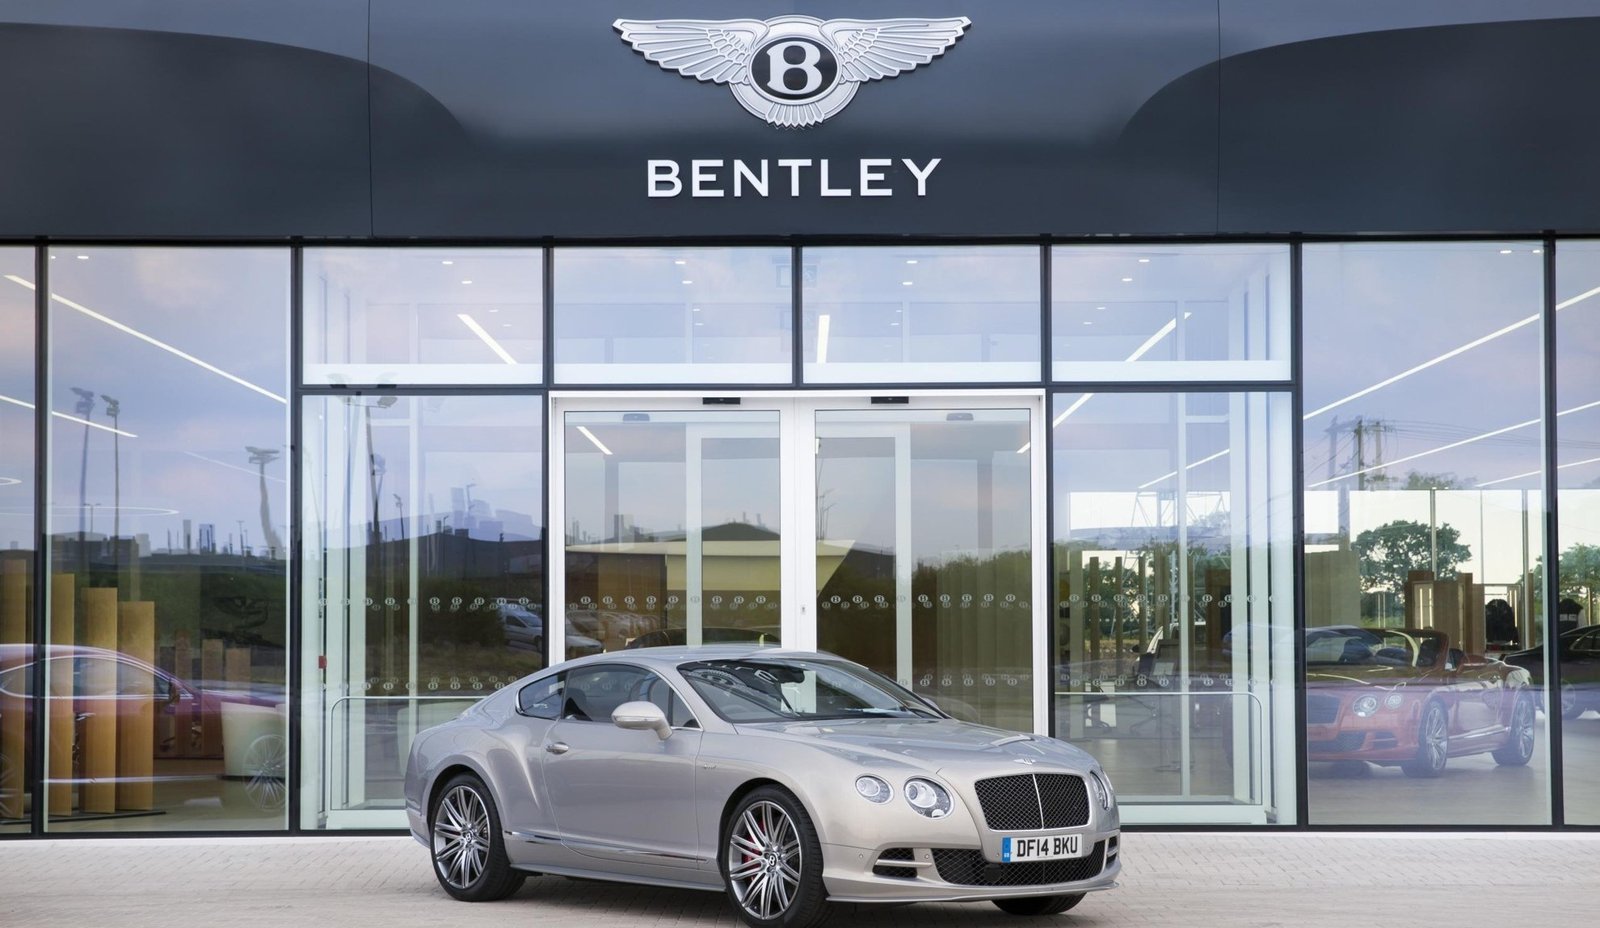 Marketing Strategy of Bentley